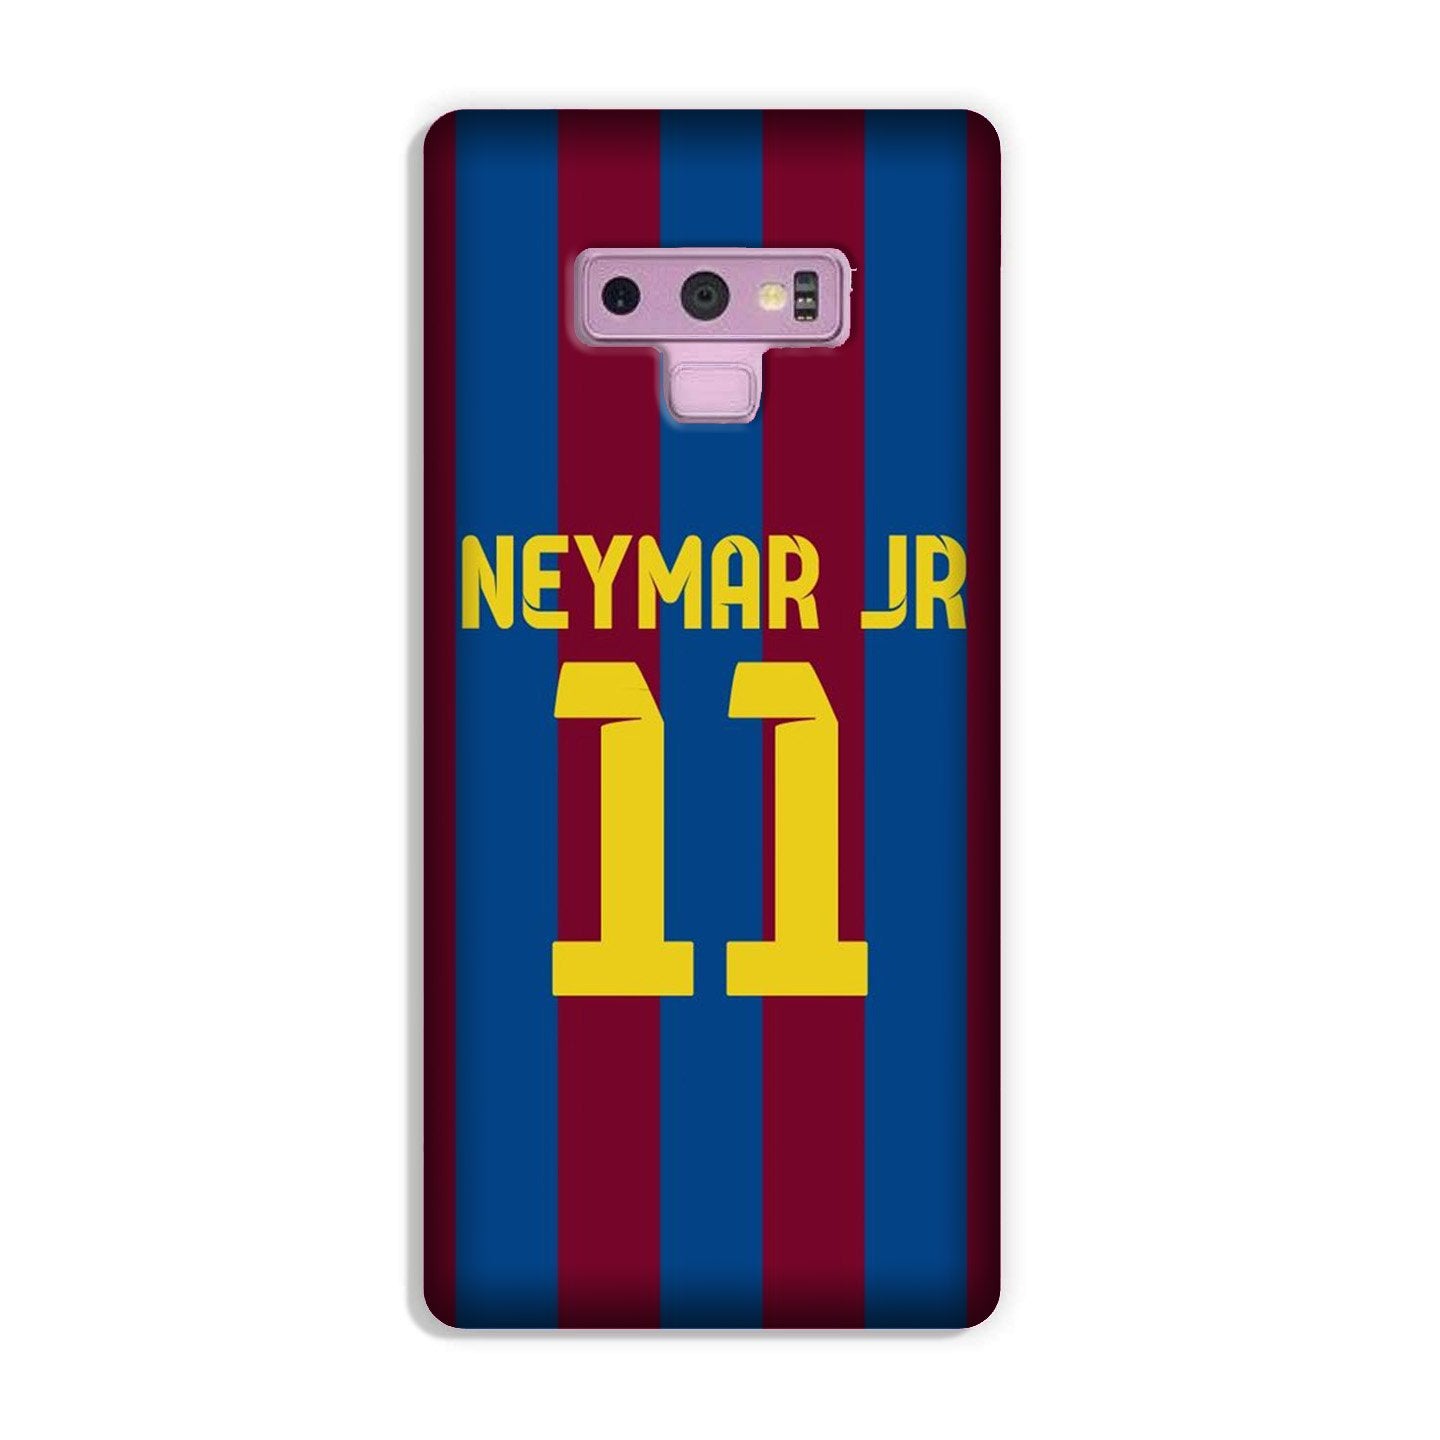 Neymar Jr Case for Galaxy Note 9(Design - 162)